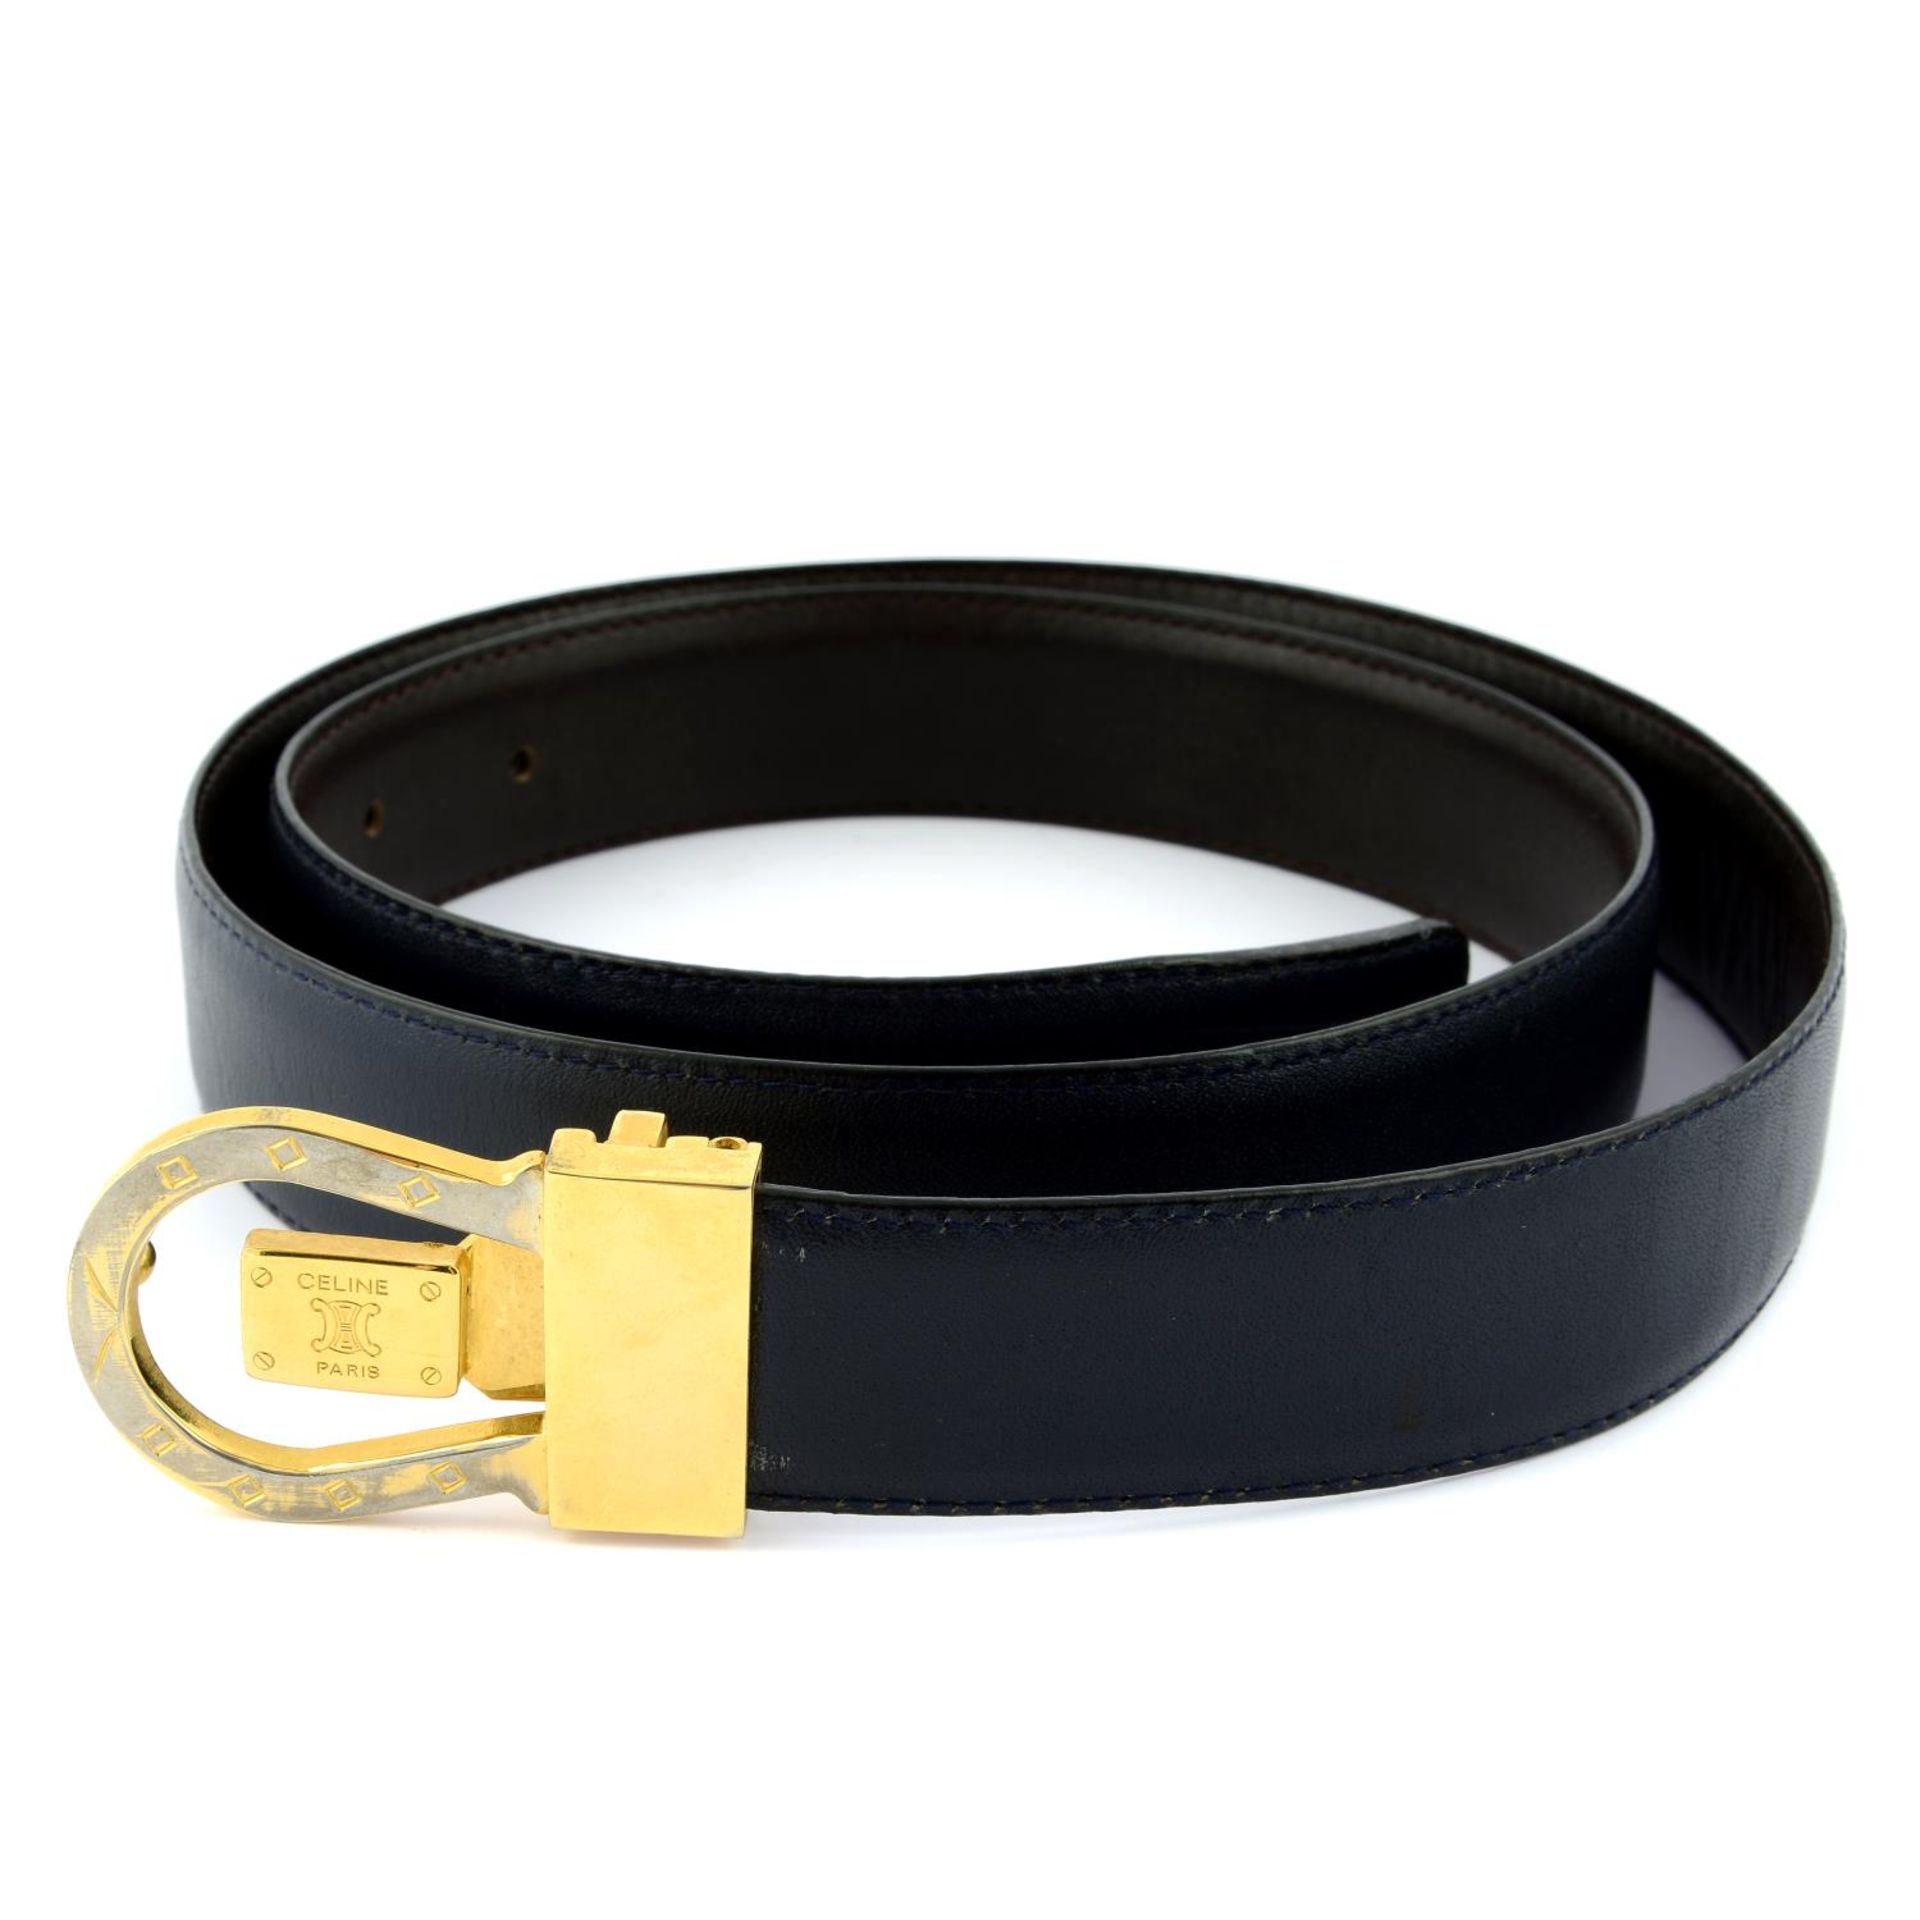 CÉLINE - a black leather belt.